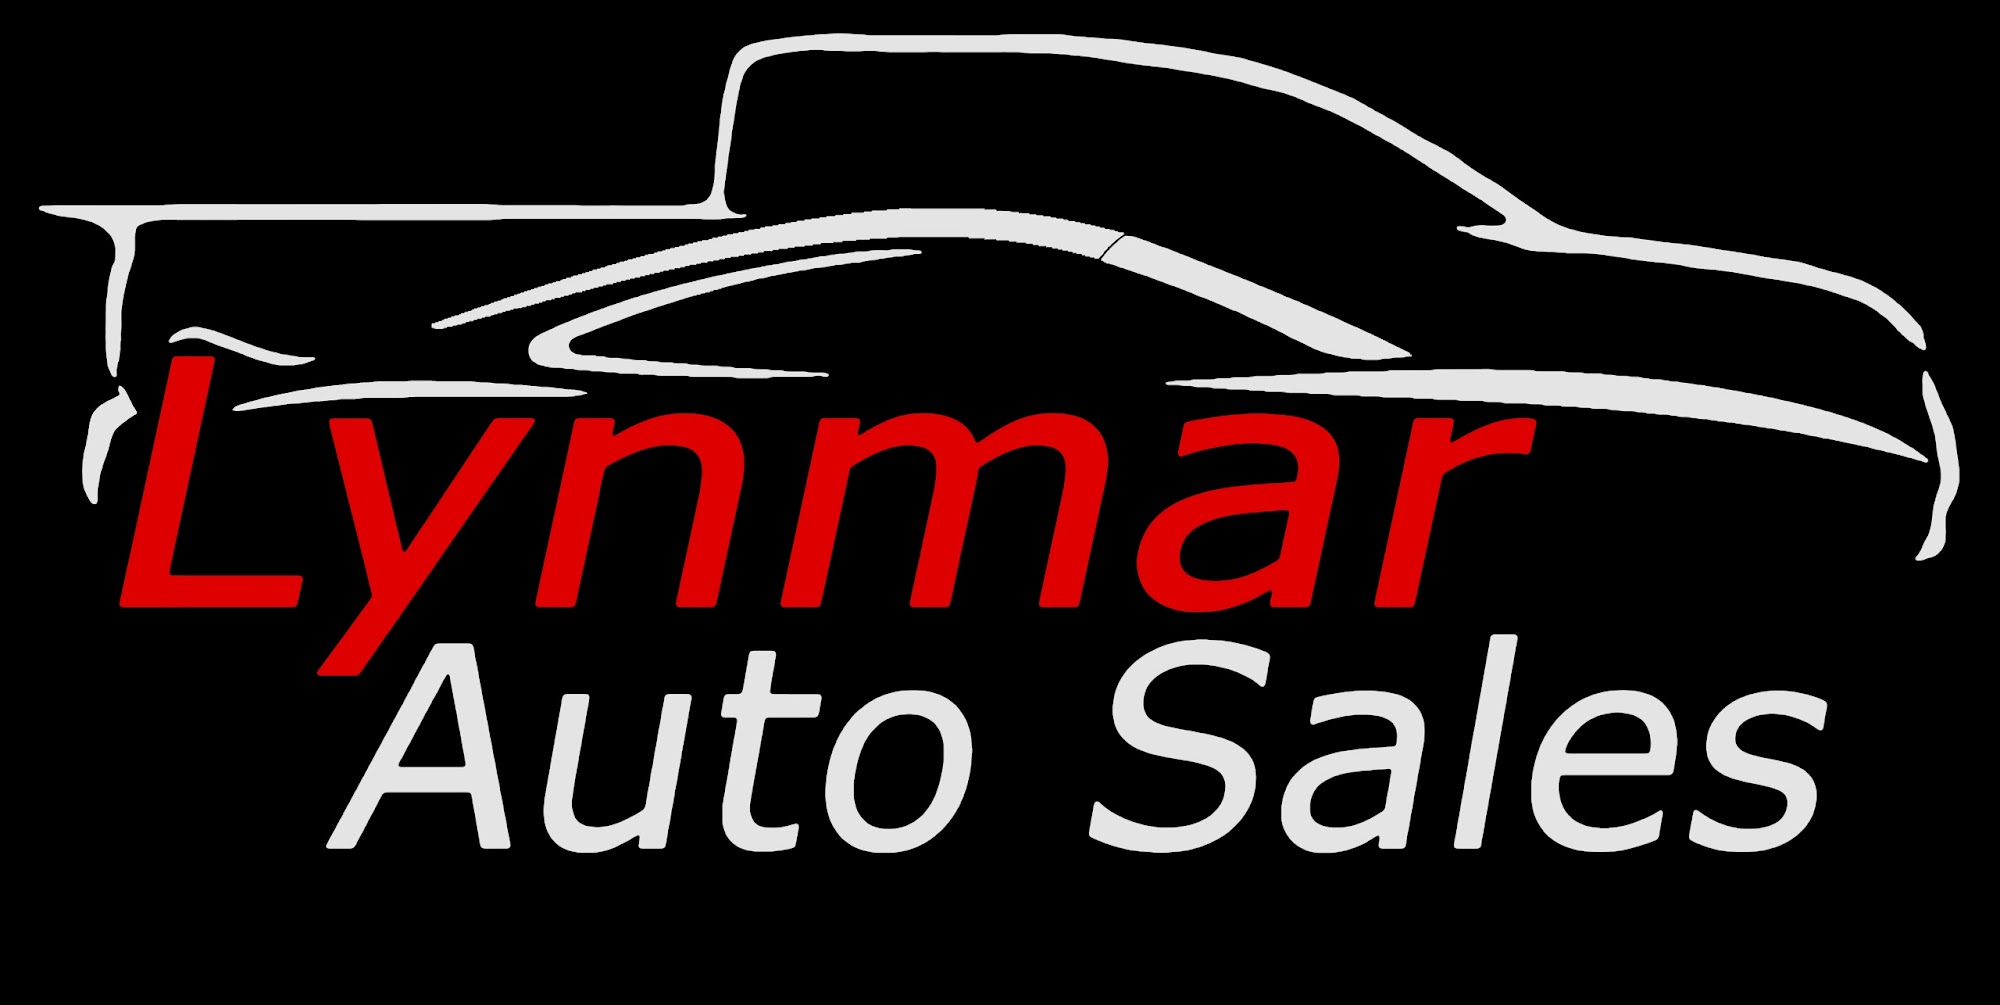 Lynmar Auto Sales